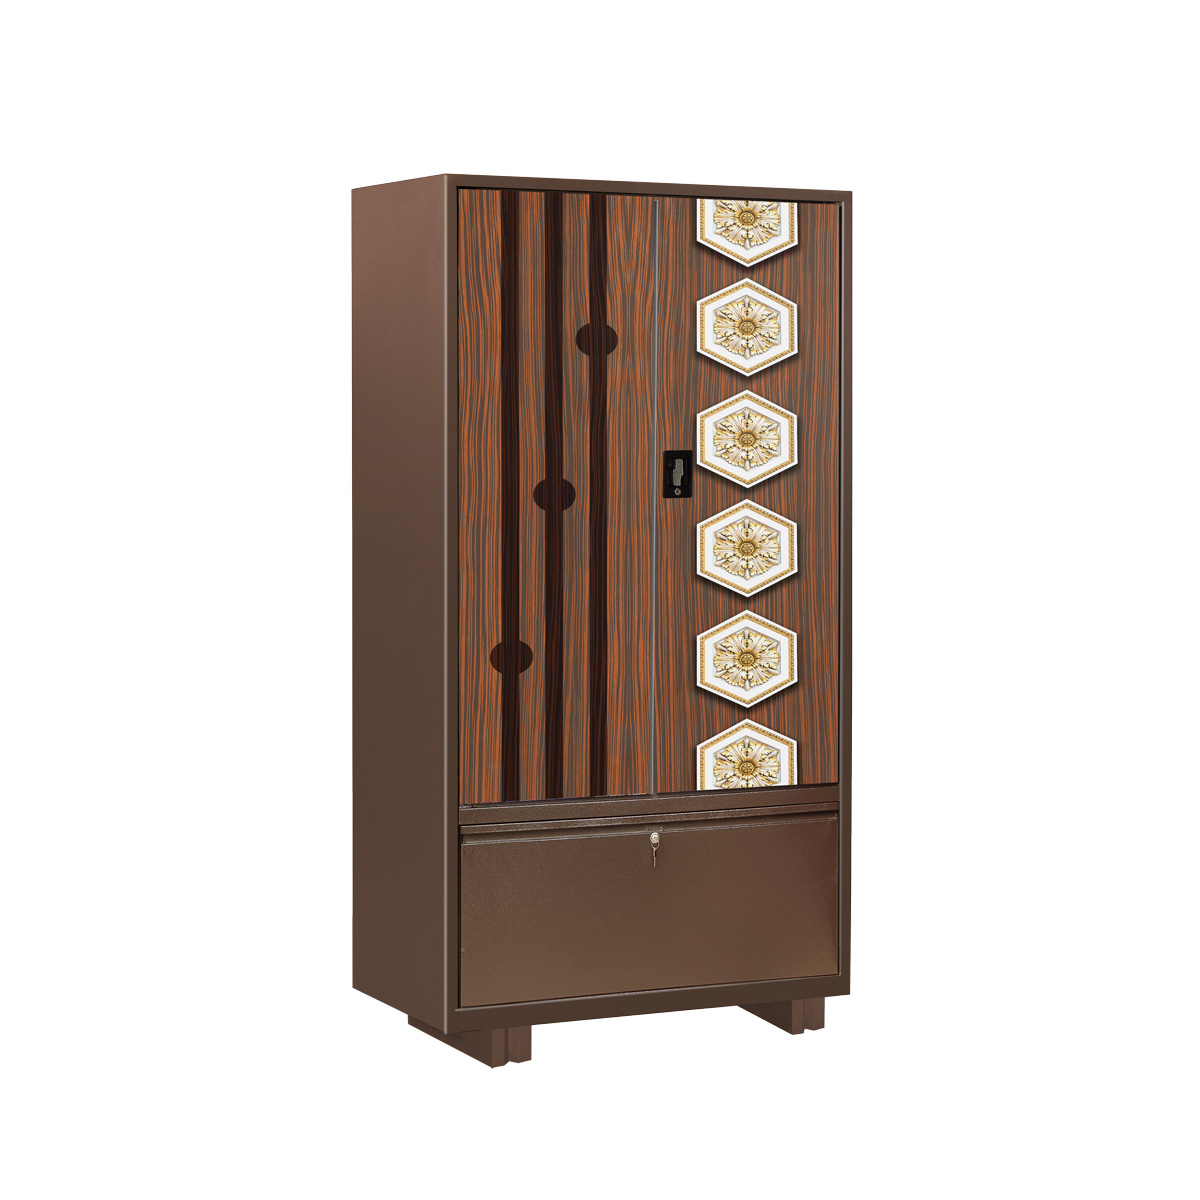 Locker System Almirah | Regal Furniture